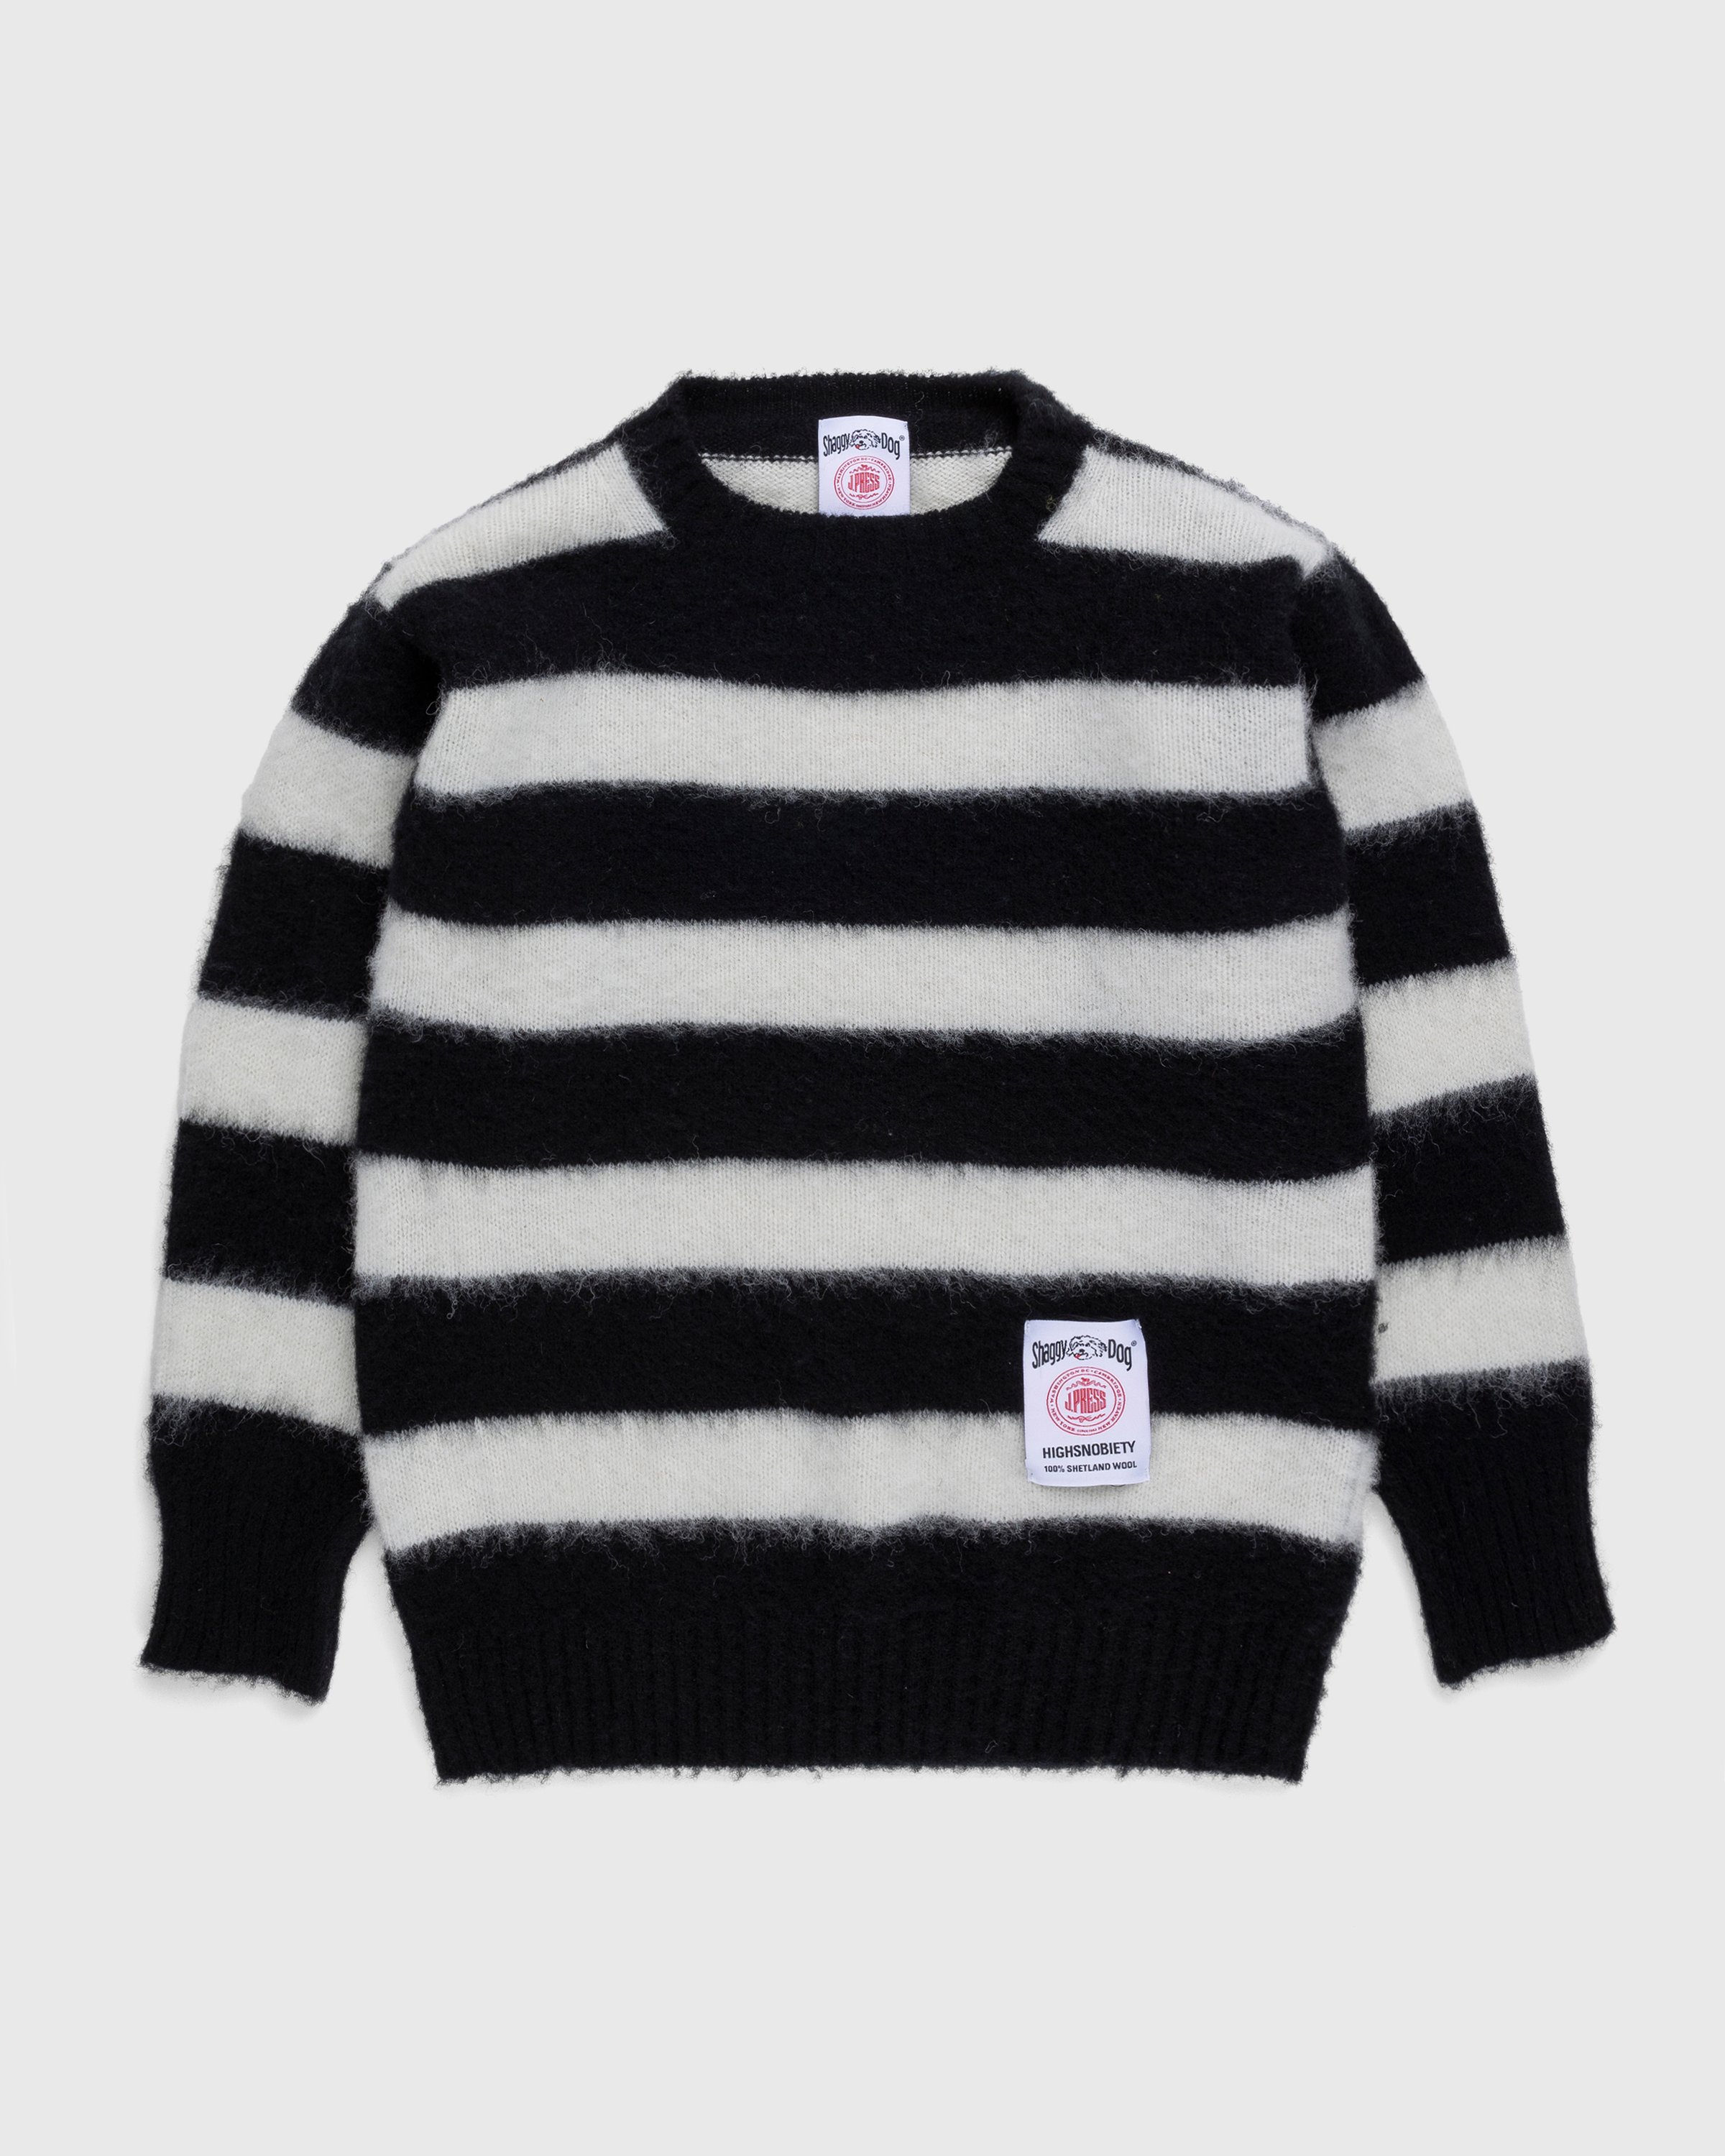 J. Press x Highsnobiety - Shaggy Dog Stripe Sweater Black/Cream - Clothing - Multi - Image 1